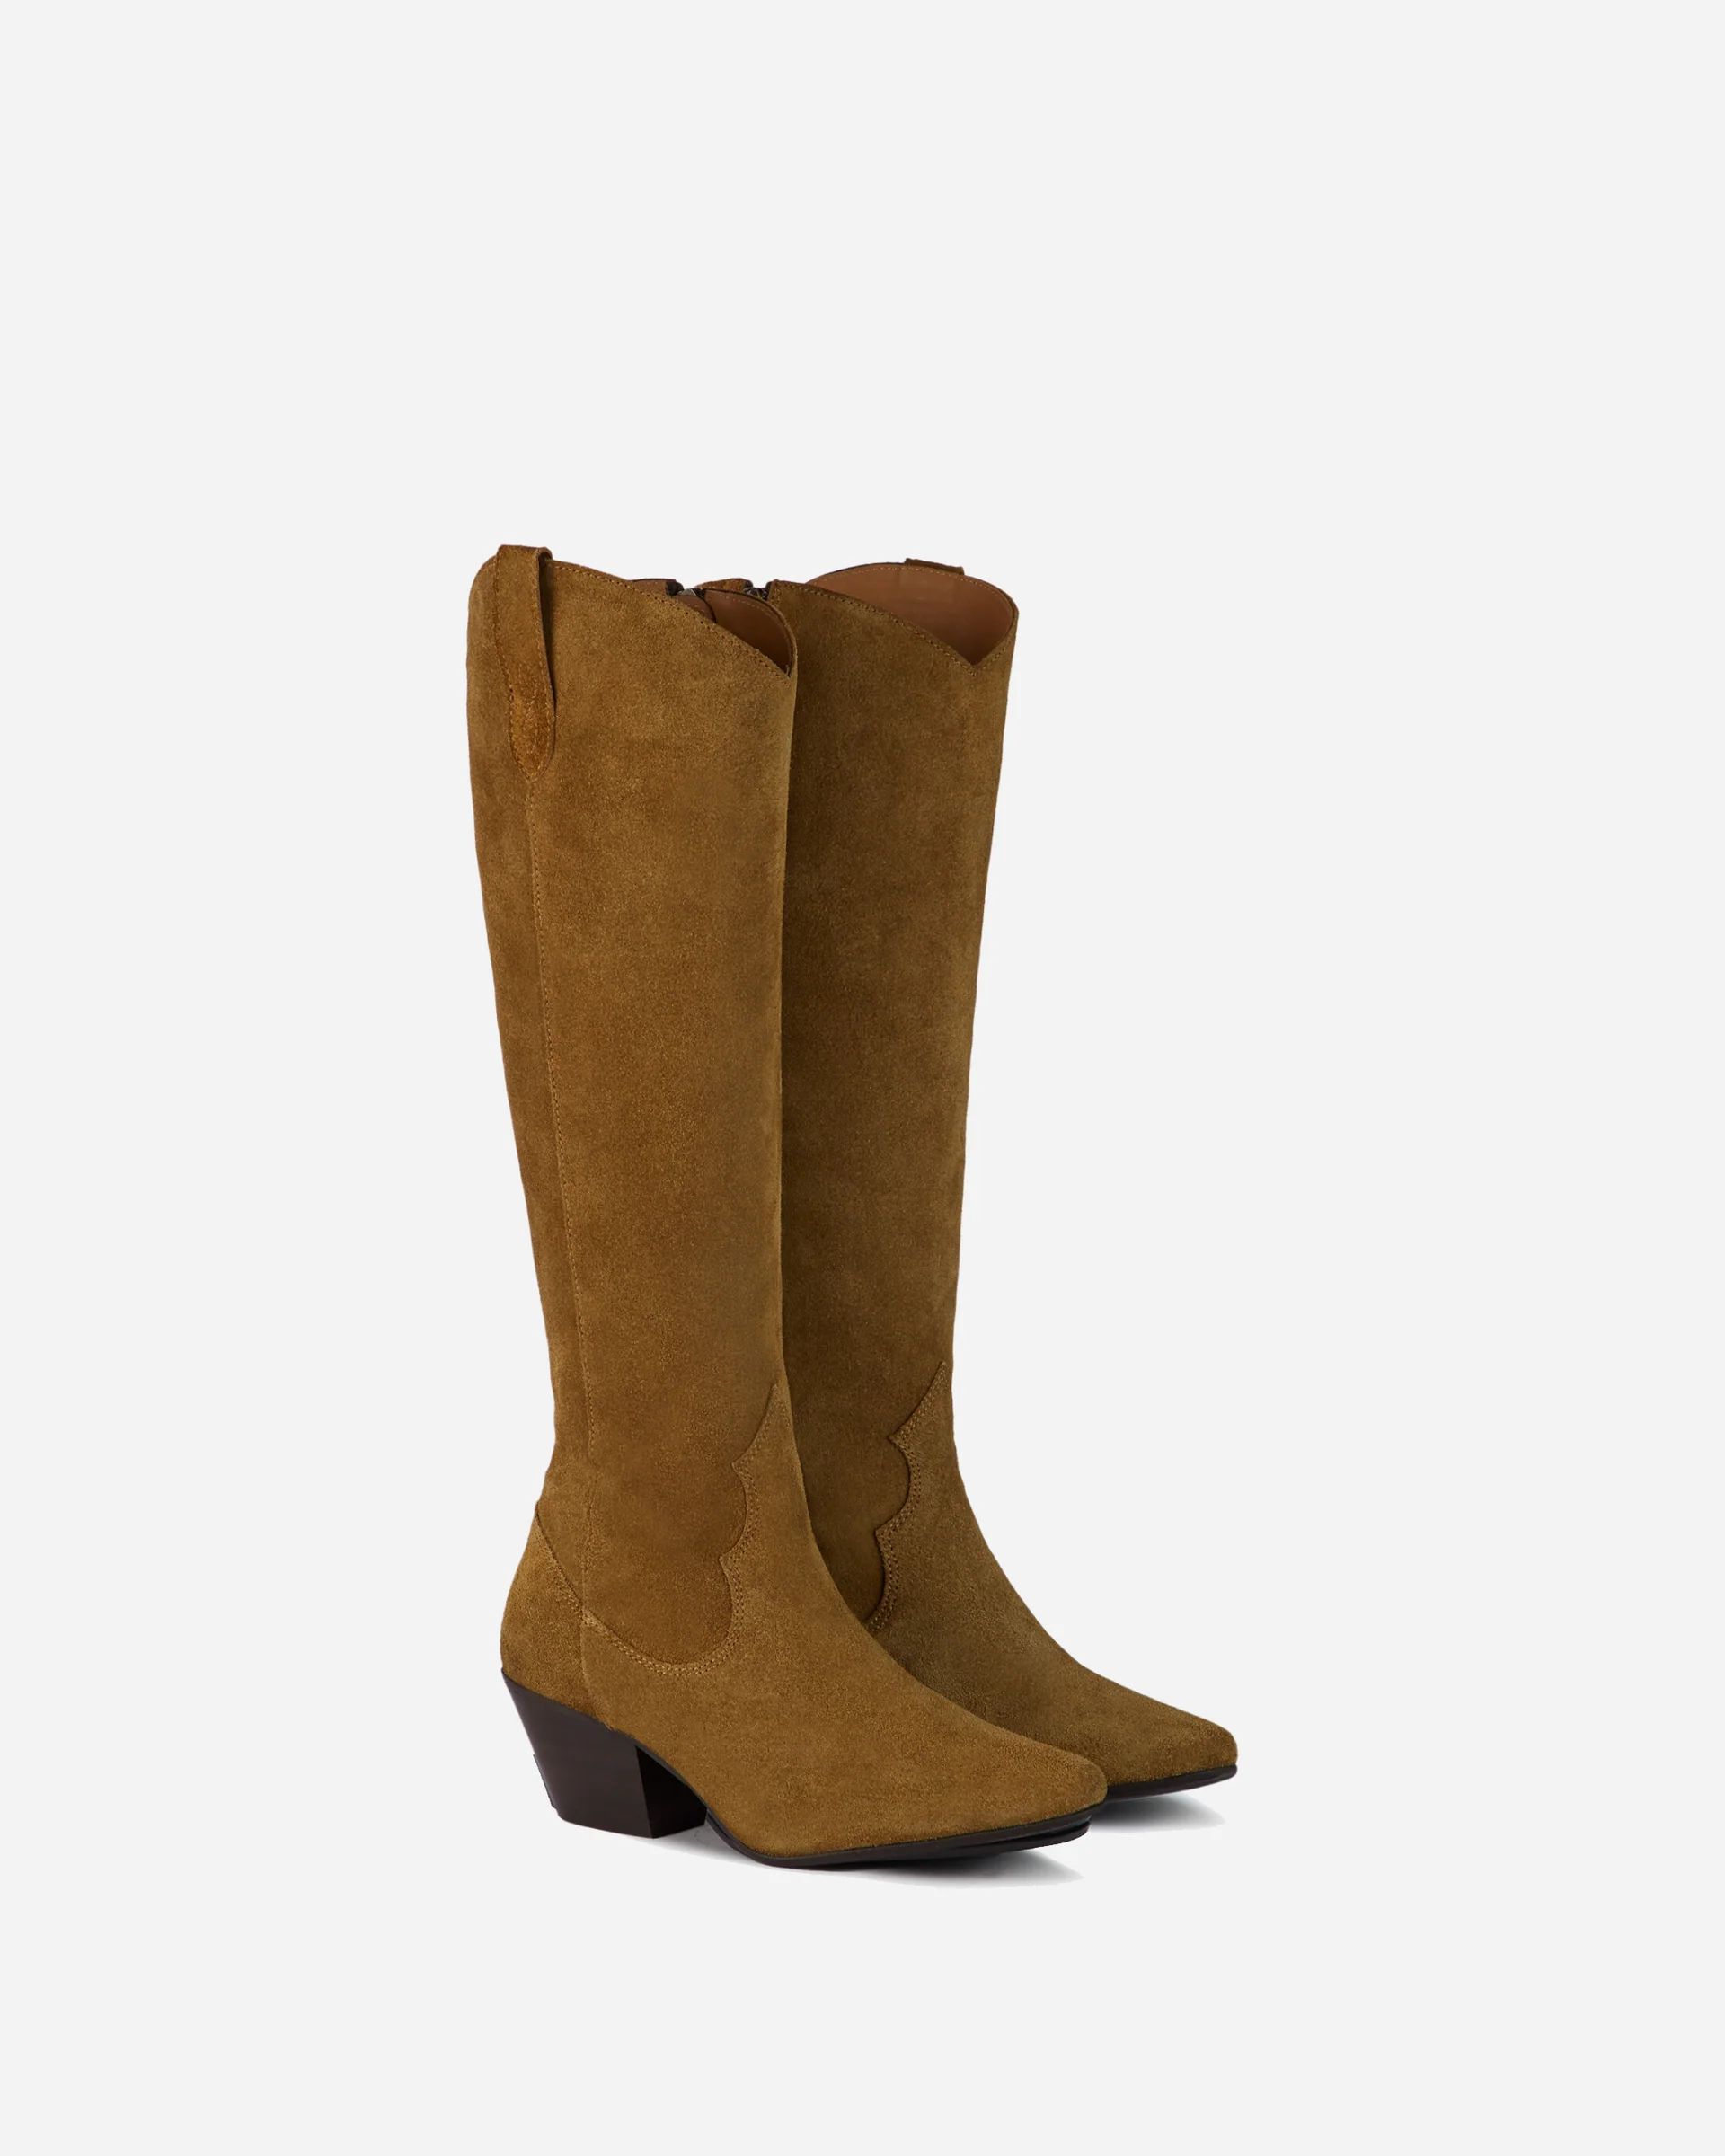 Saffron Knee High Boots in Marigold Suede | DuoBoots